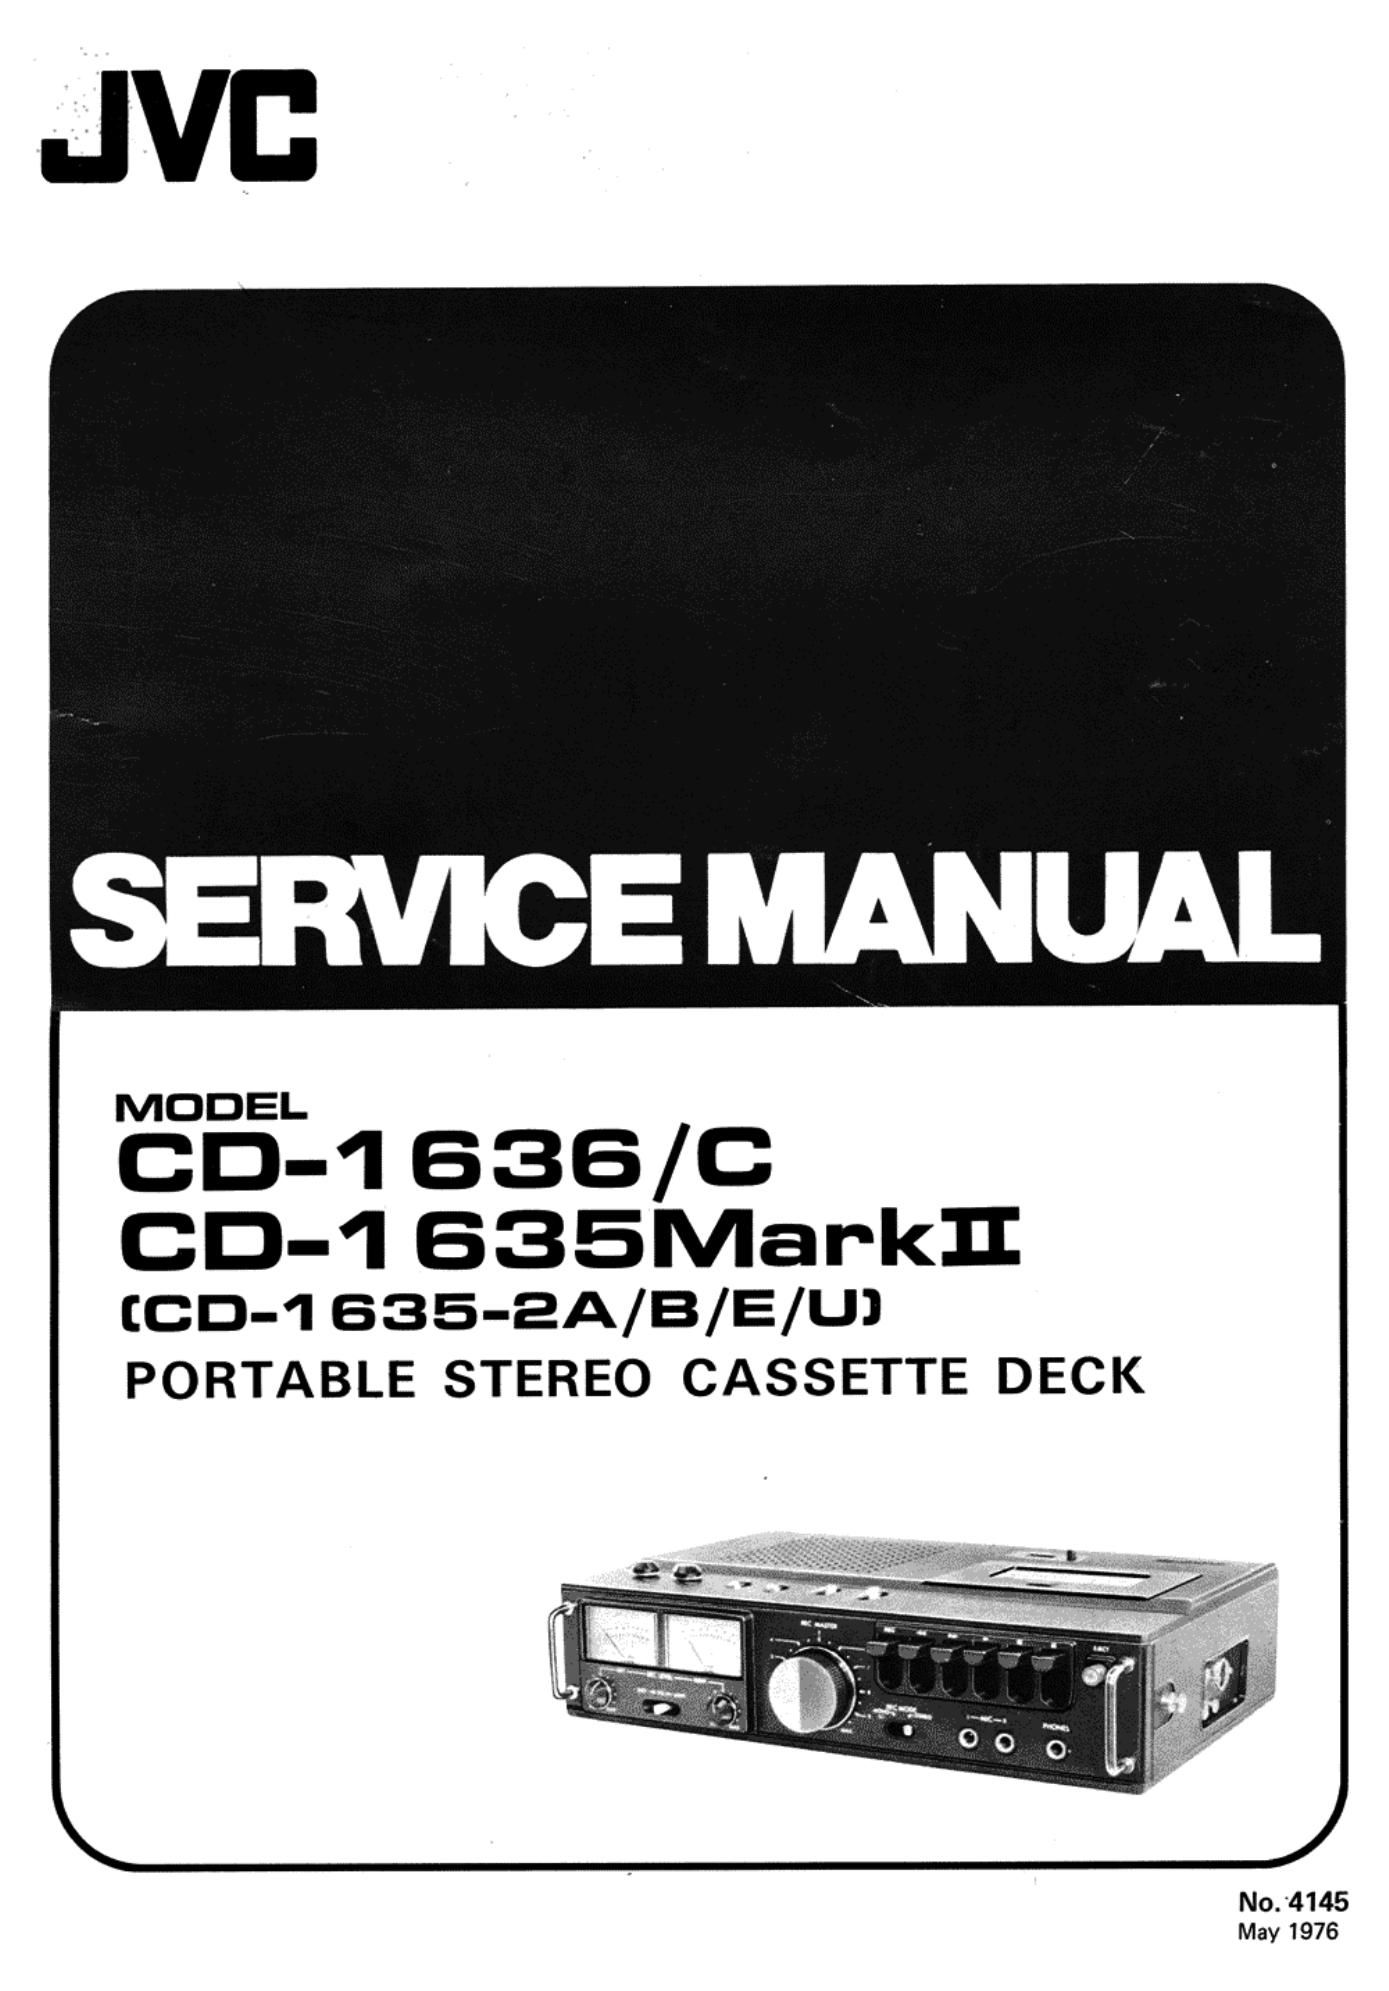 Jvc CD 1635 Mk2 Service Manual